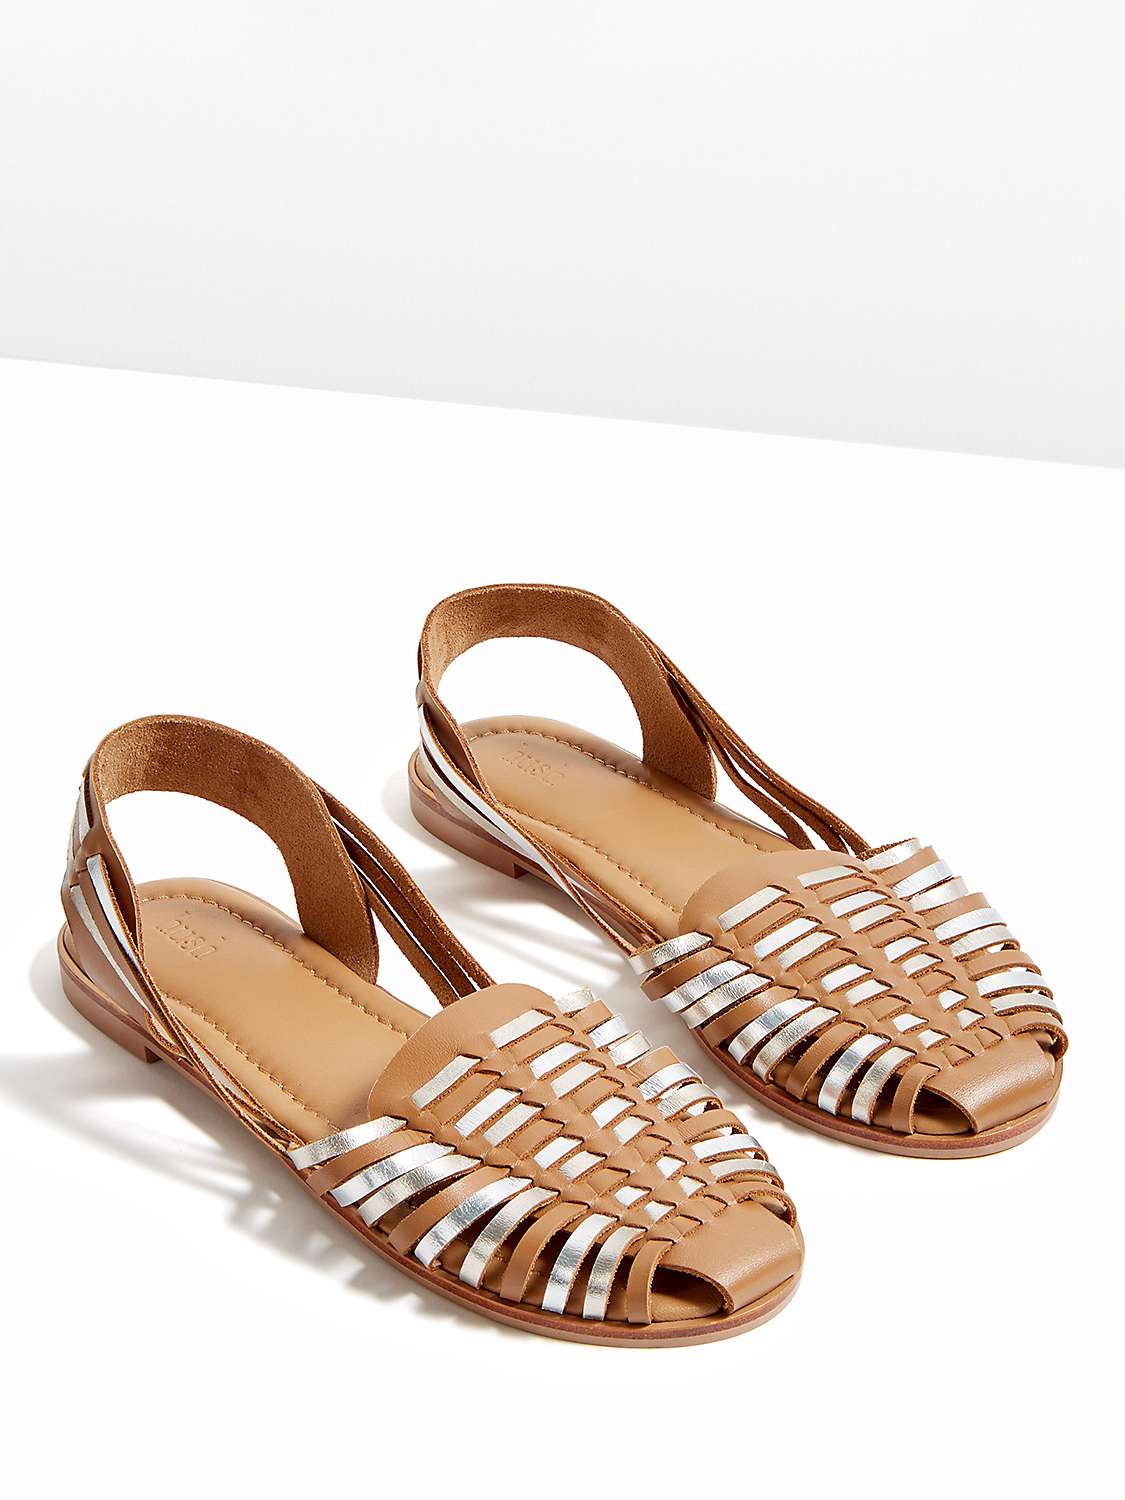 Buy HUSH Trenton Huarache Sandals, Tan/Metallic Online at johnlewis.com